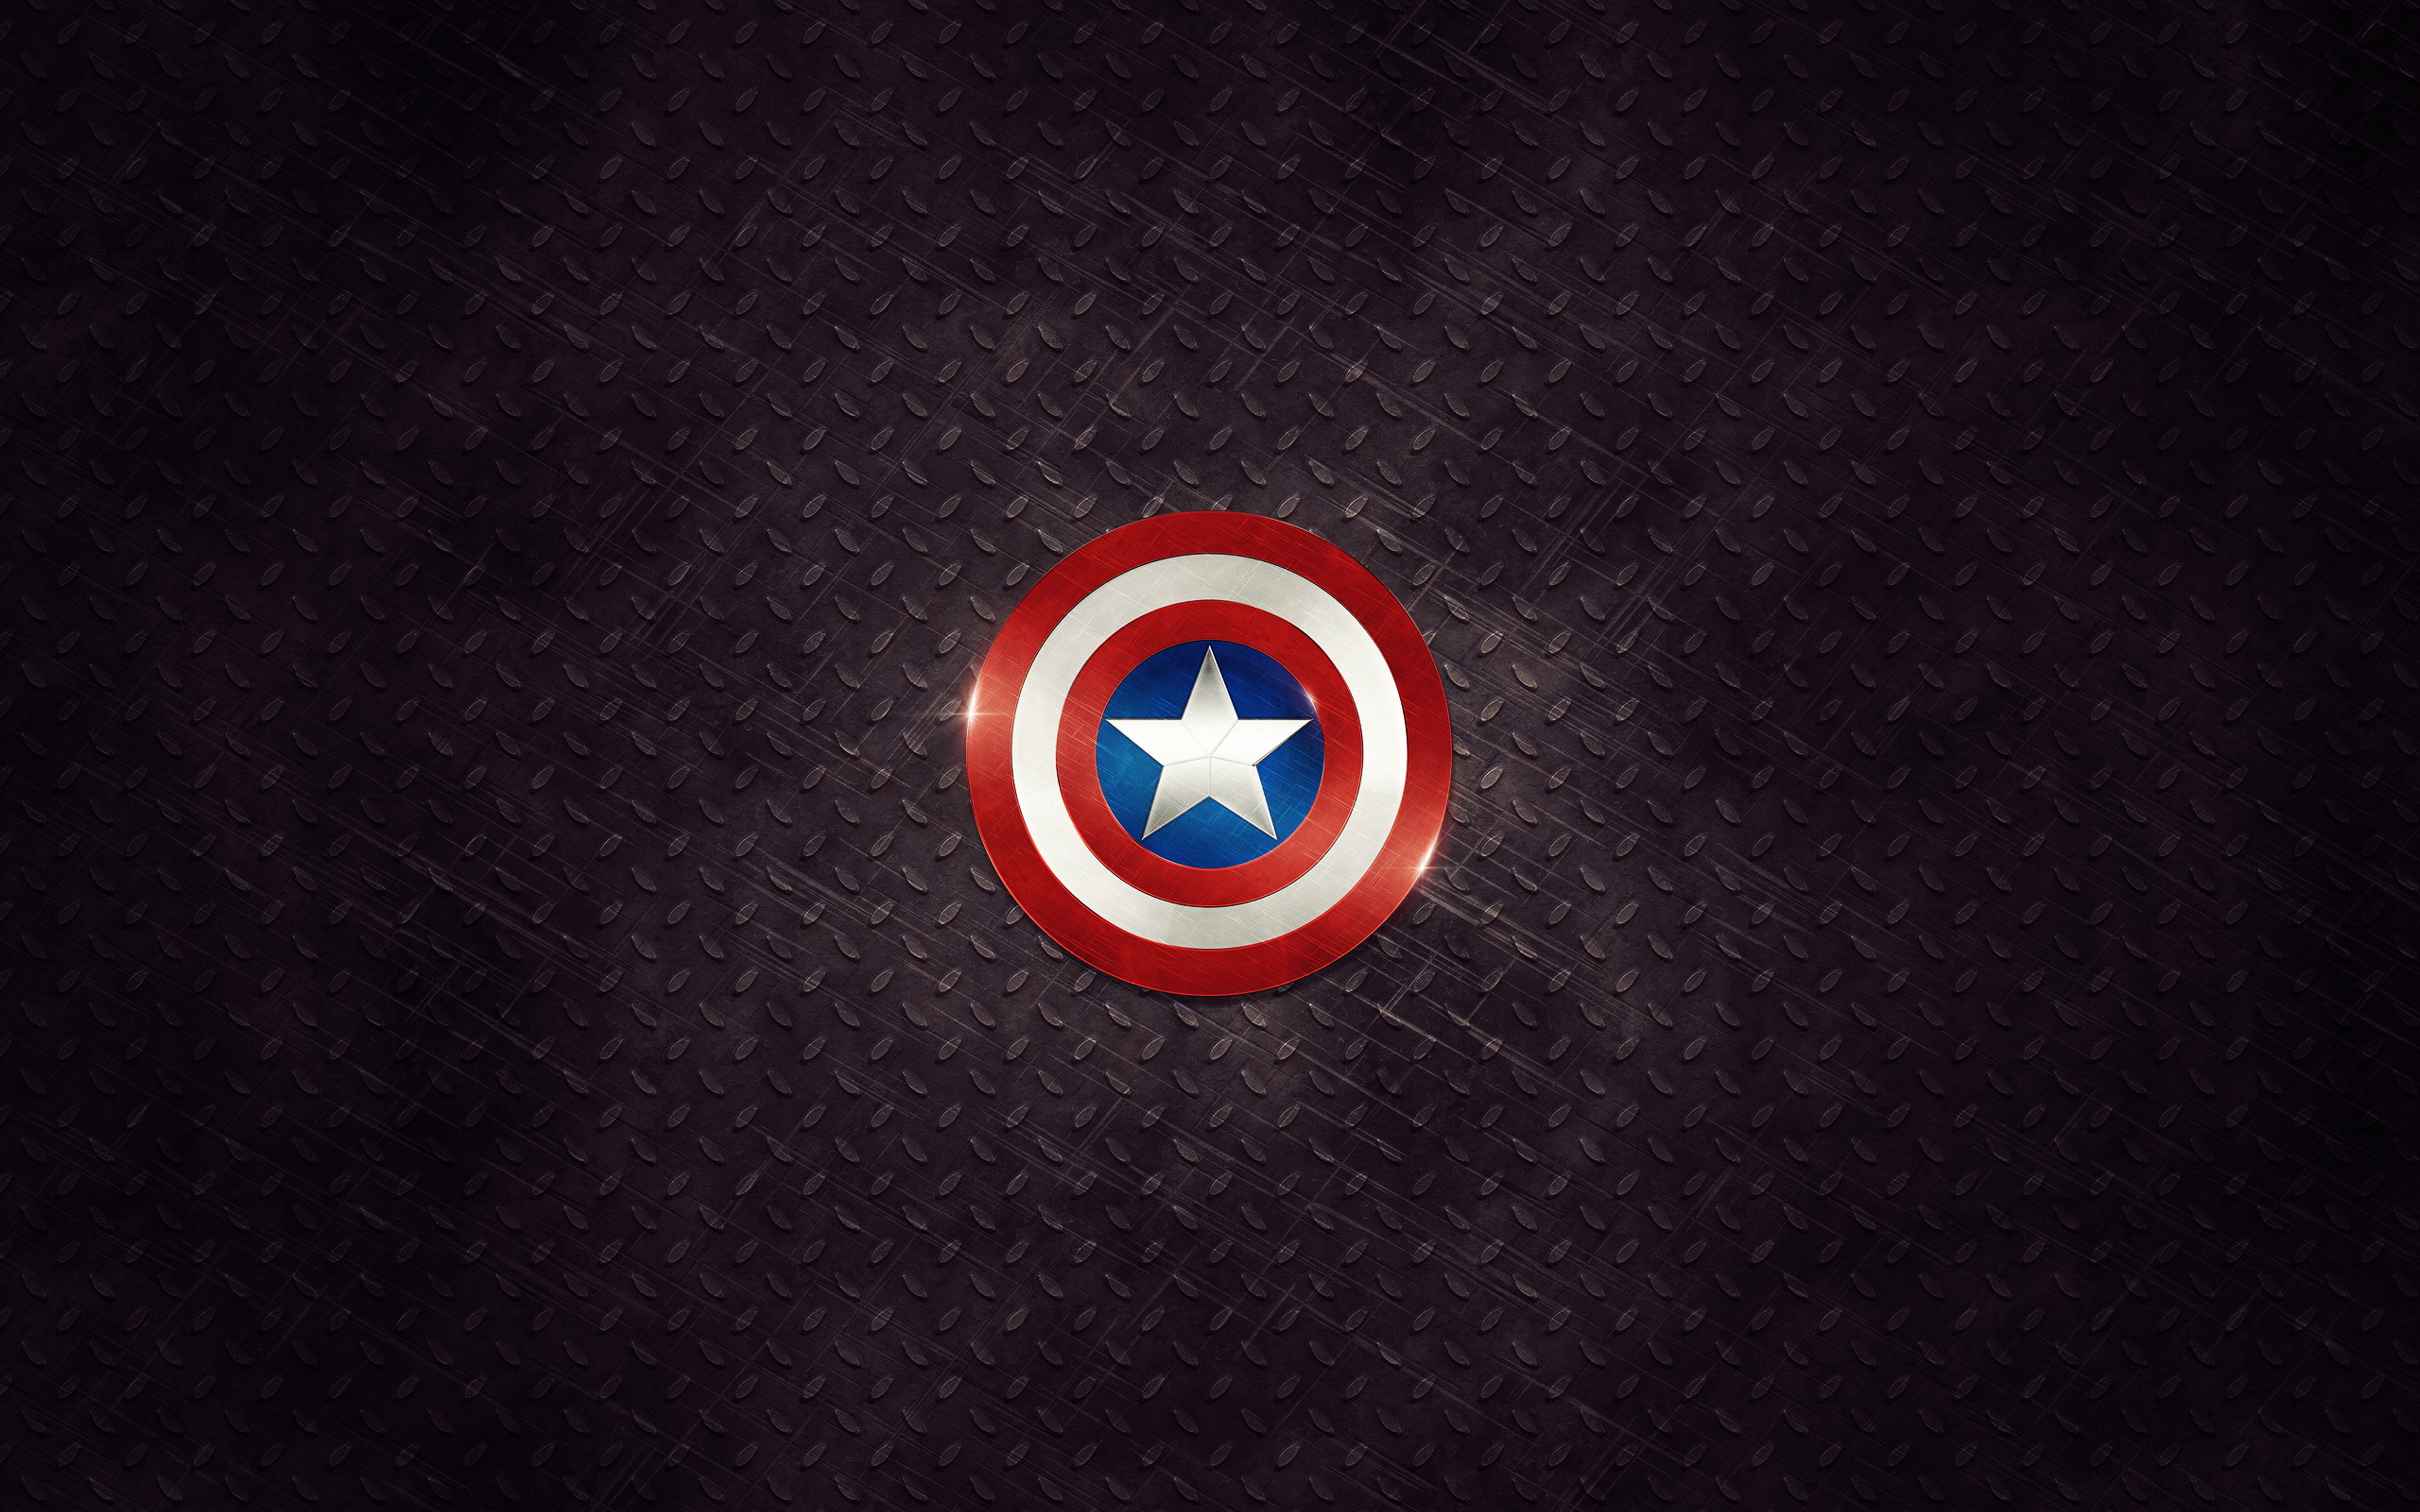 Captain Americas shield wallpaper mehro